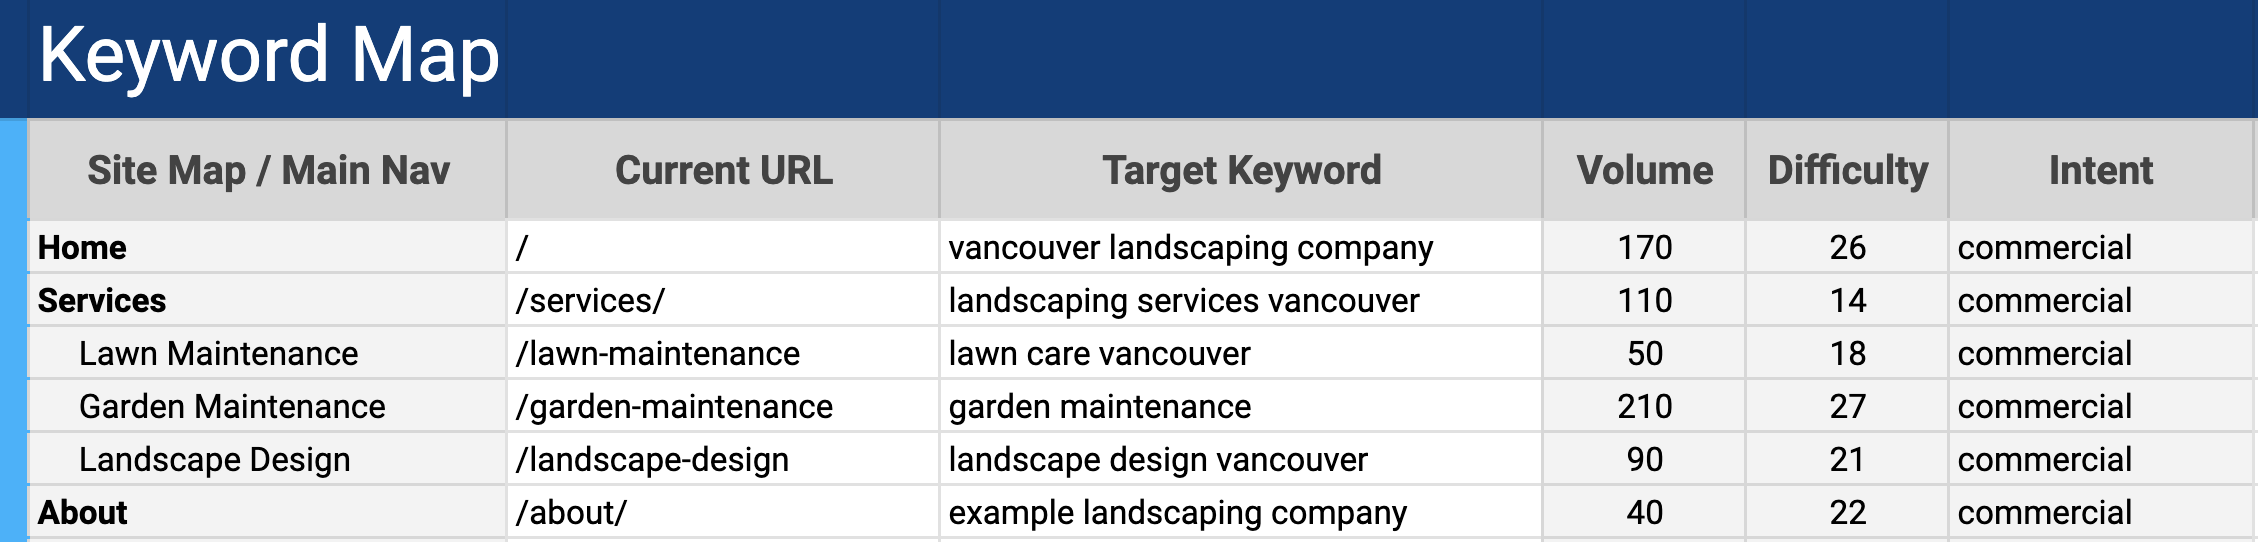 Keyword mapping example spreadsheet